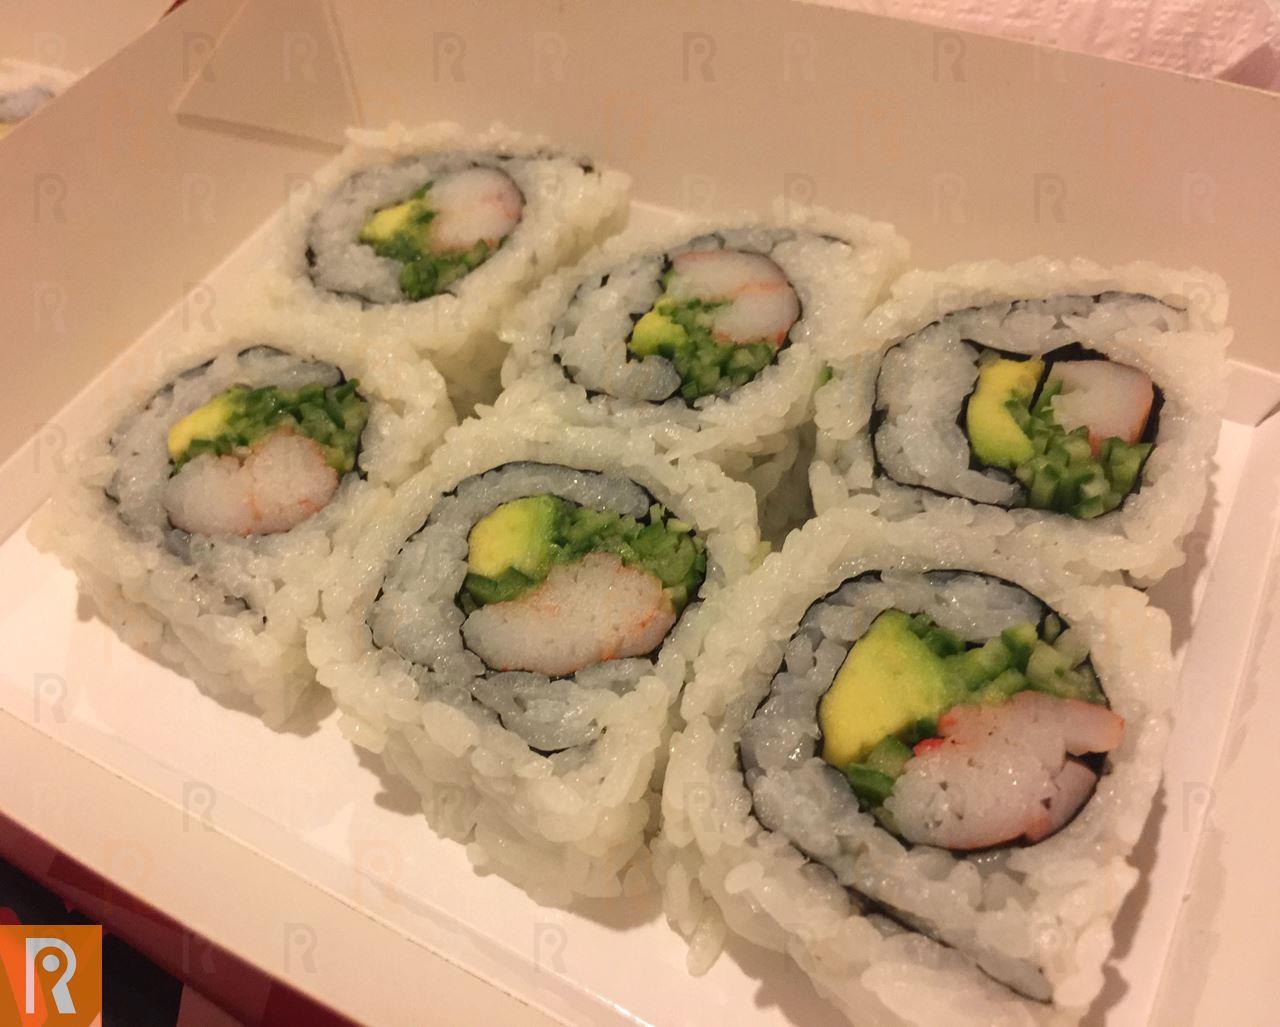 Best Sushi from Finger Sushi